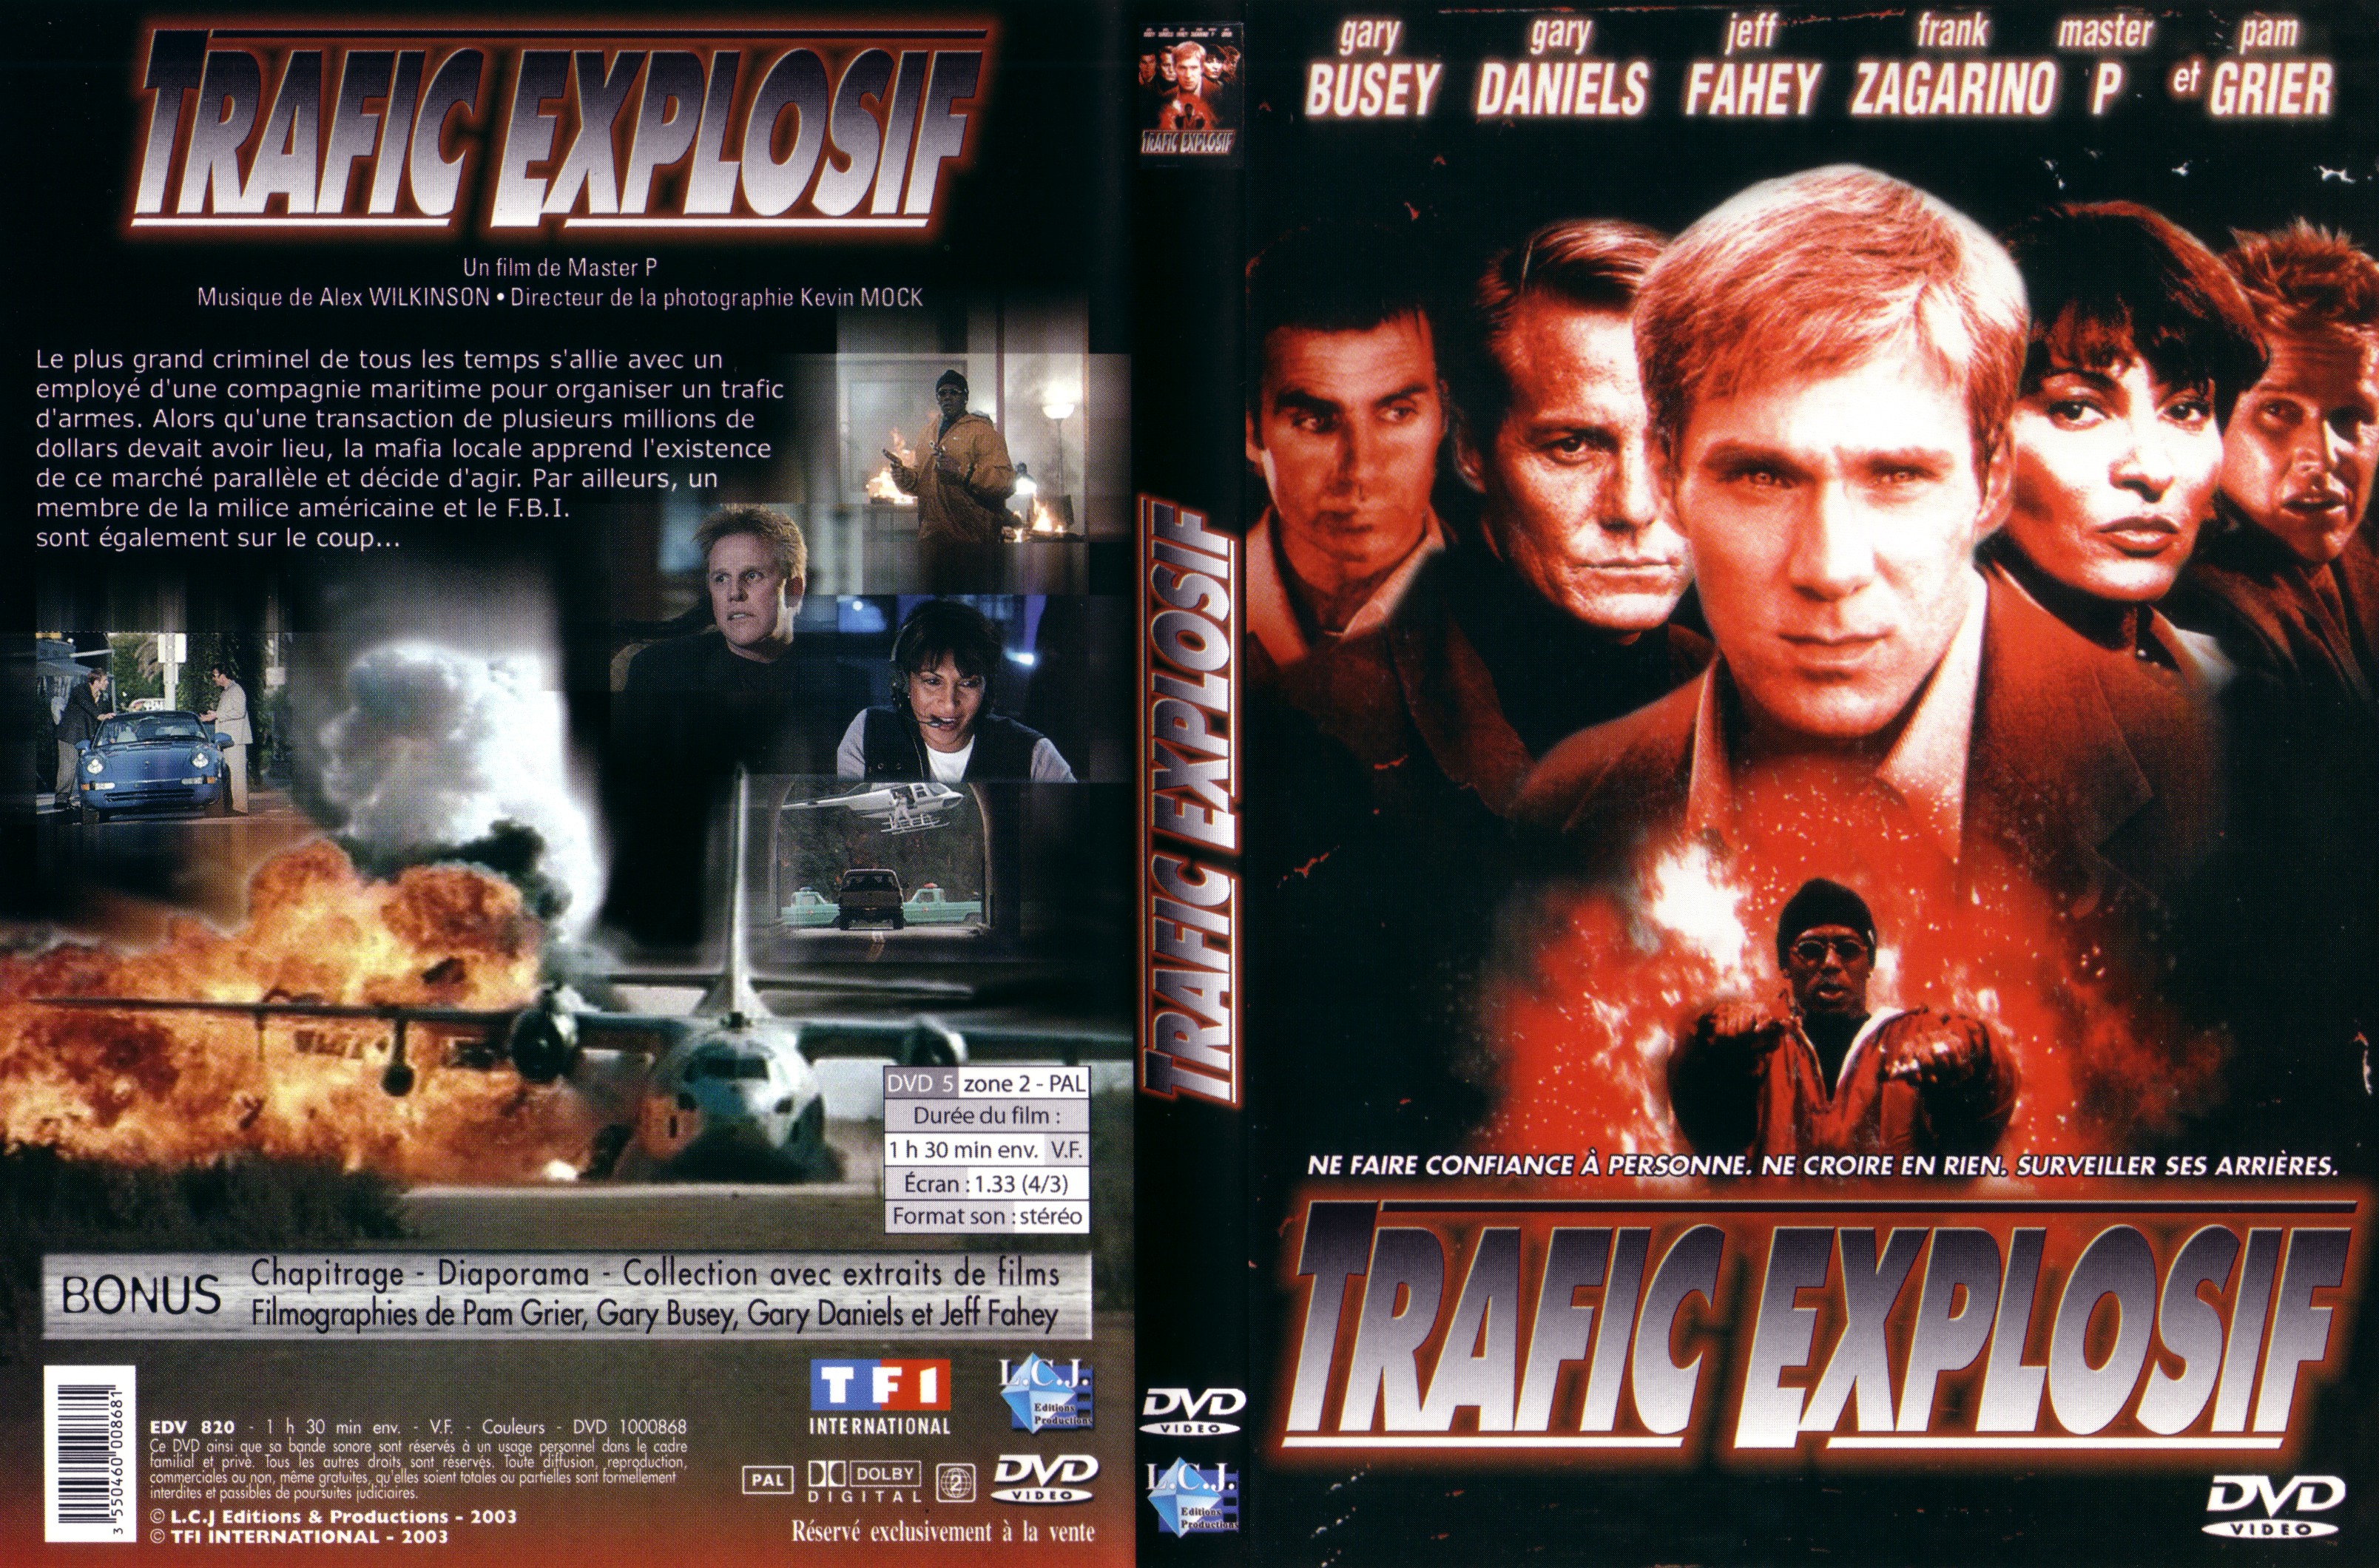 Jaquette DVD Trafic explosif